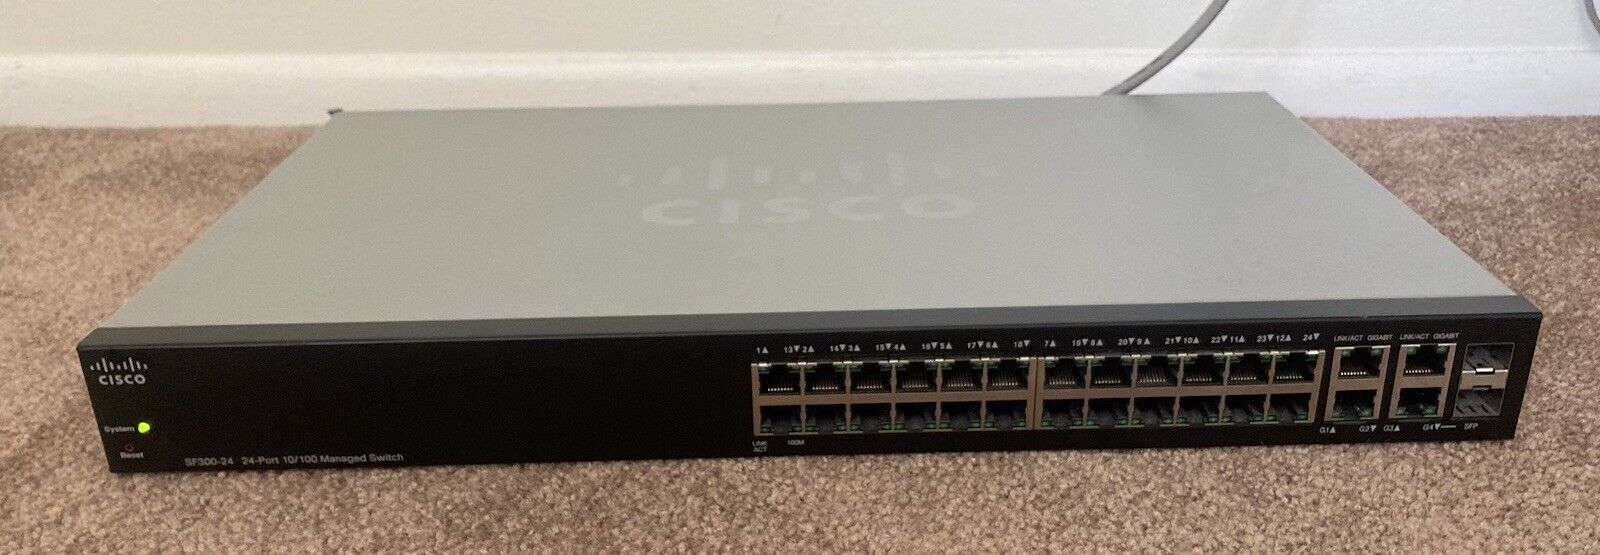 Cisco SF300-24P 24-Port 10/100 PoE Managed Ethernet Switch SRW224G4P-K9